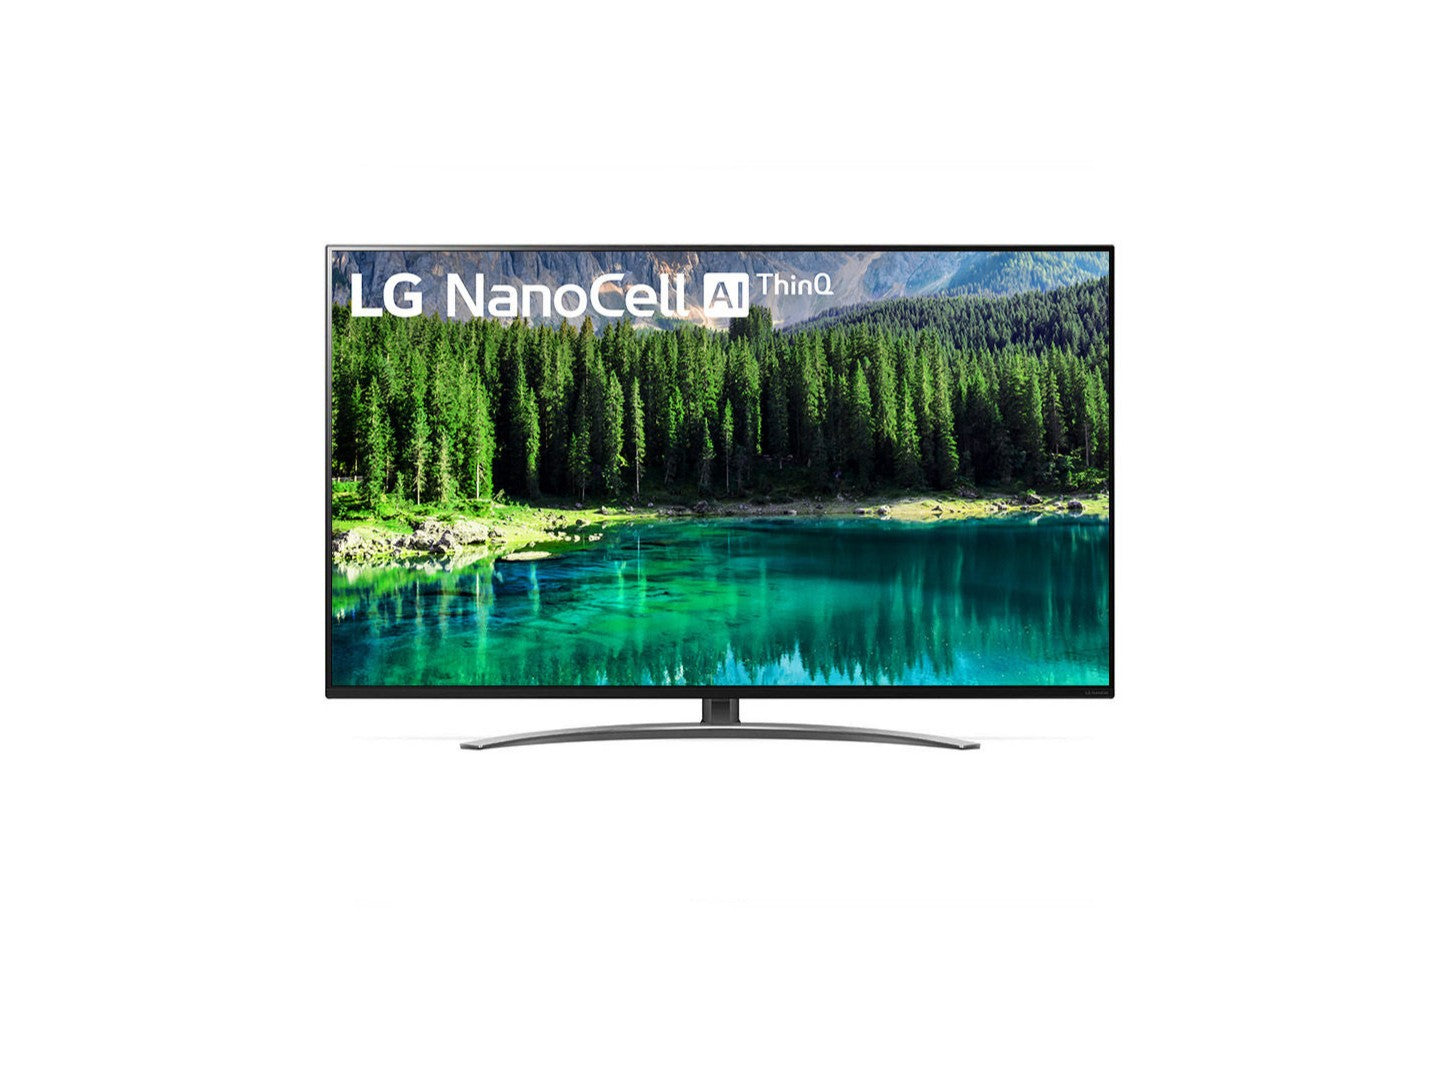 LG NanoCell TV 55 inch SM8600 Series NanoCell Display 4K HDR Smart